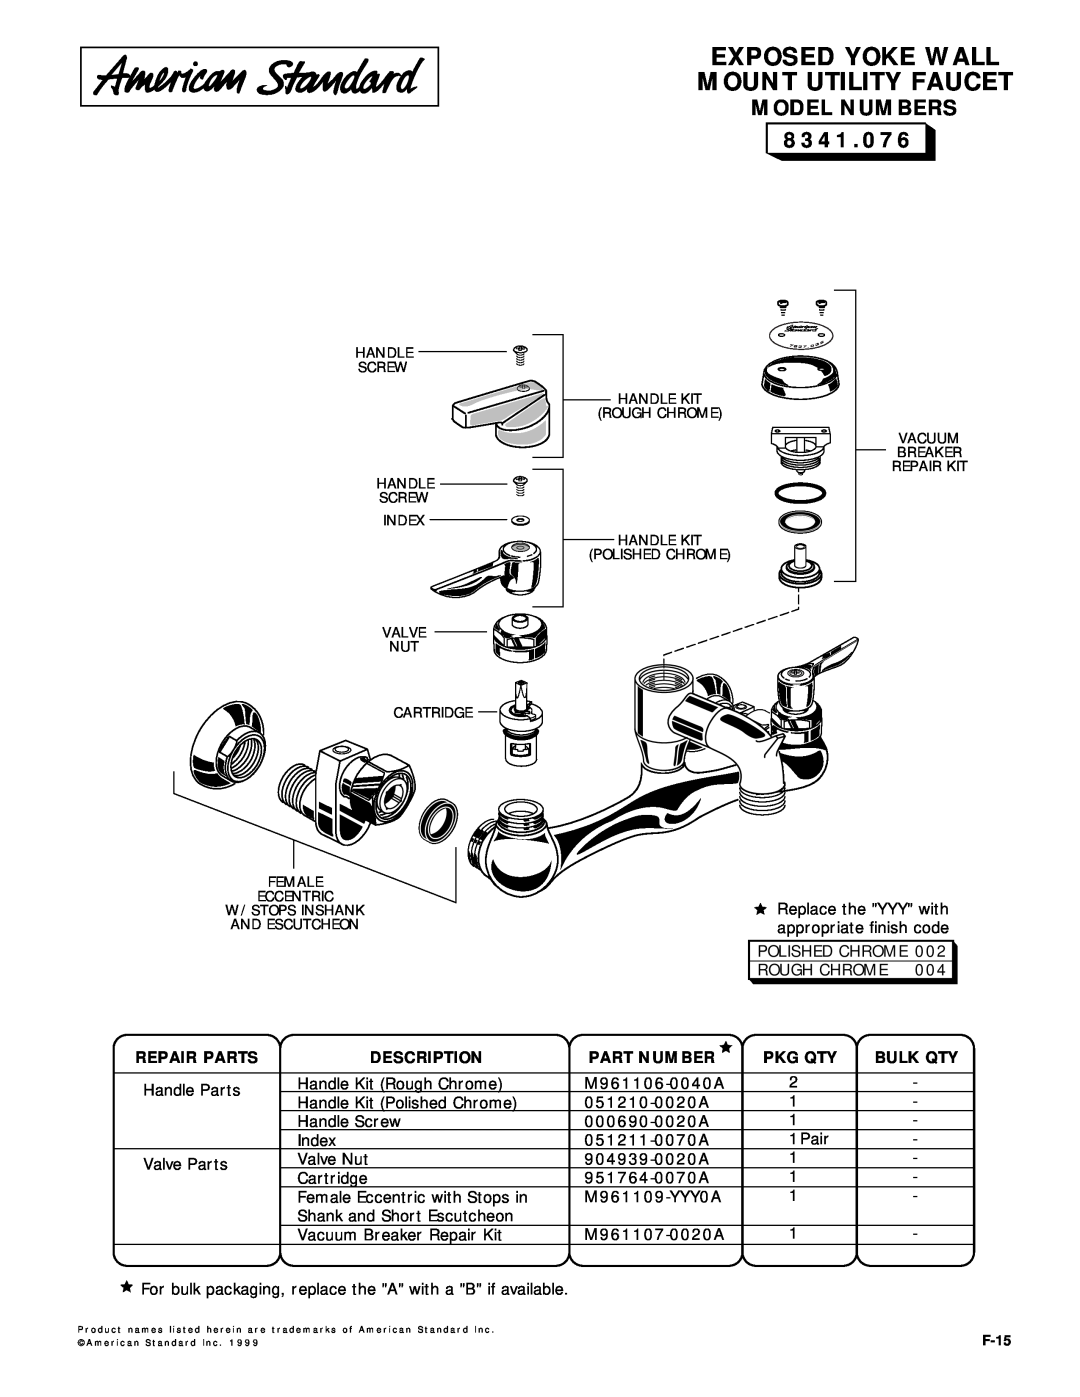 American Standard 8341.076 manual Exposed Yoke Wall Mount Utility Faucet, Model Numbers, Repair Parts, Description 